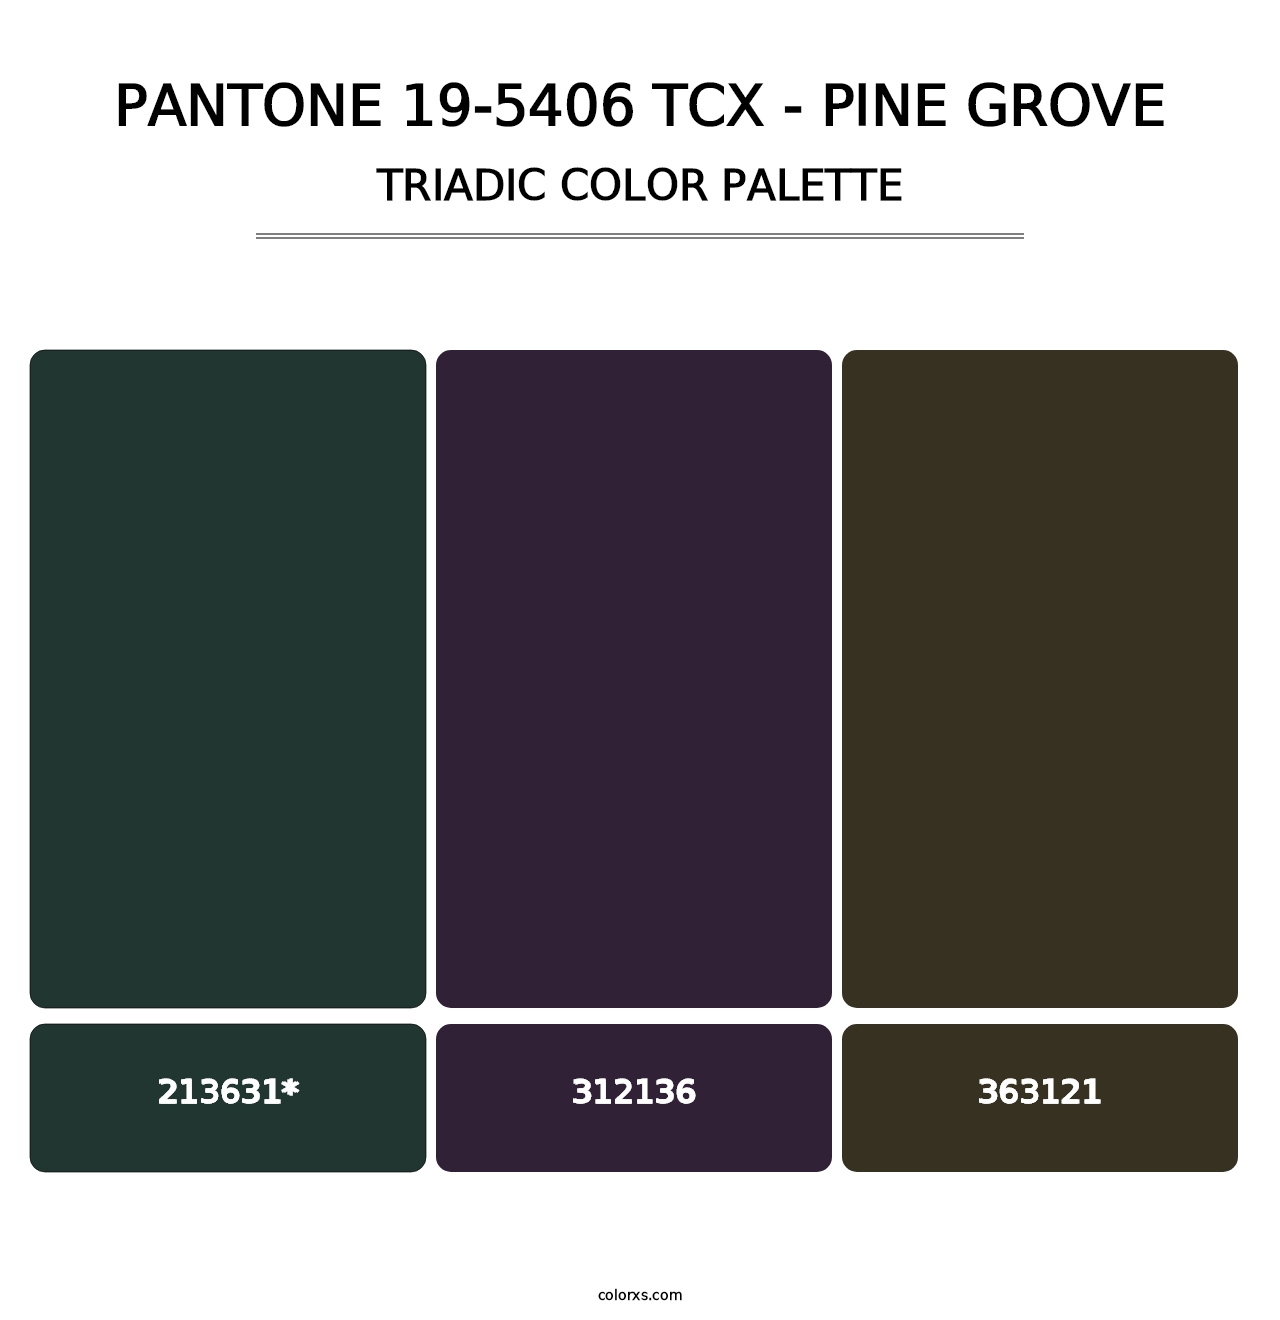 PANTONE 19-5406 TCX - Pine Grove - Triadic Color Palette